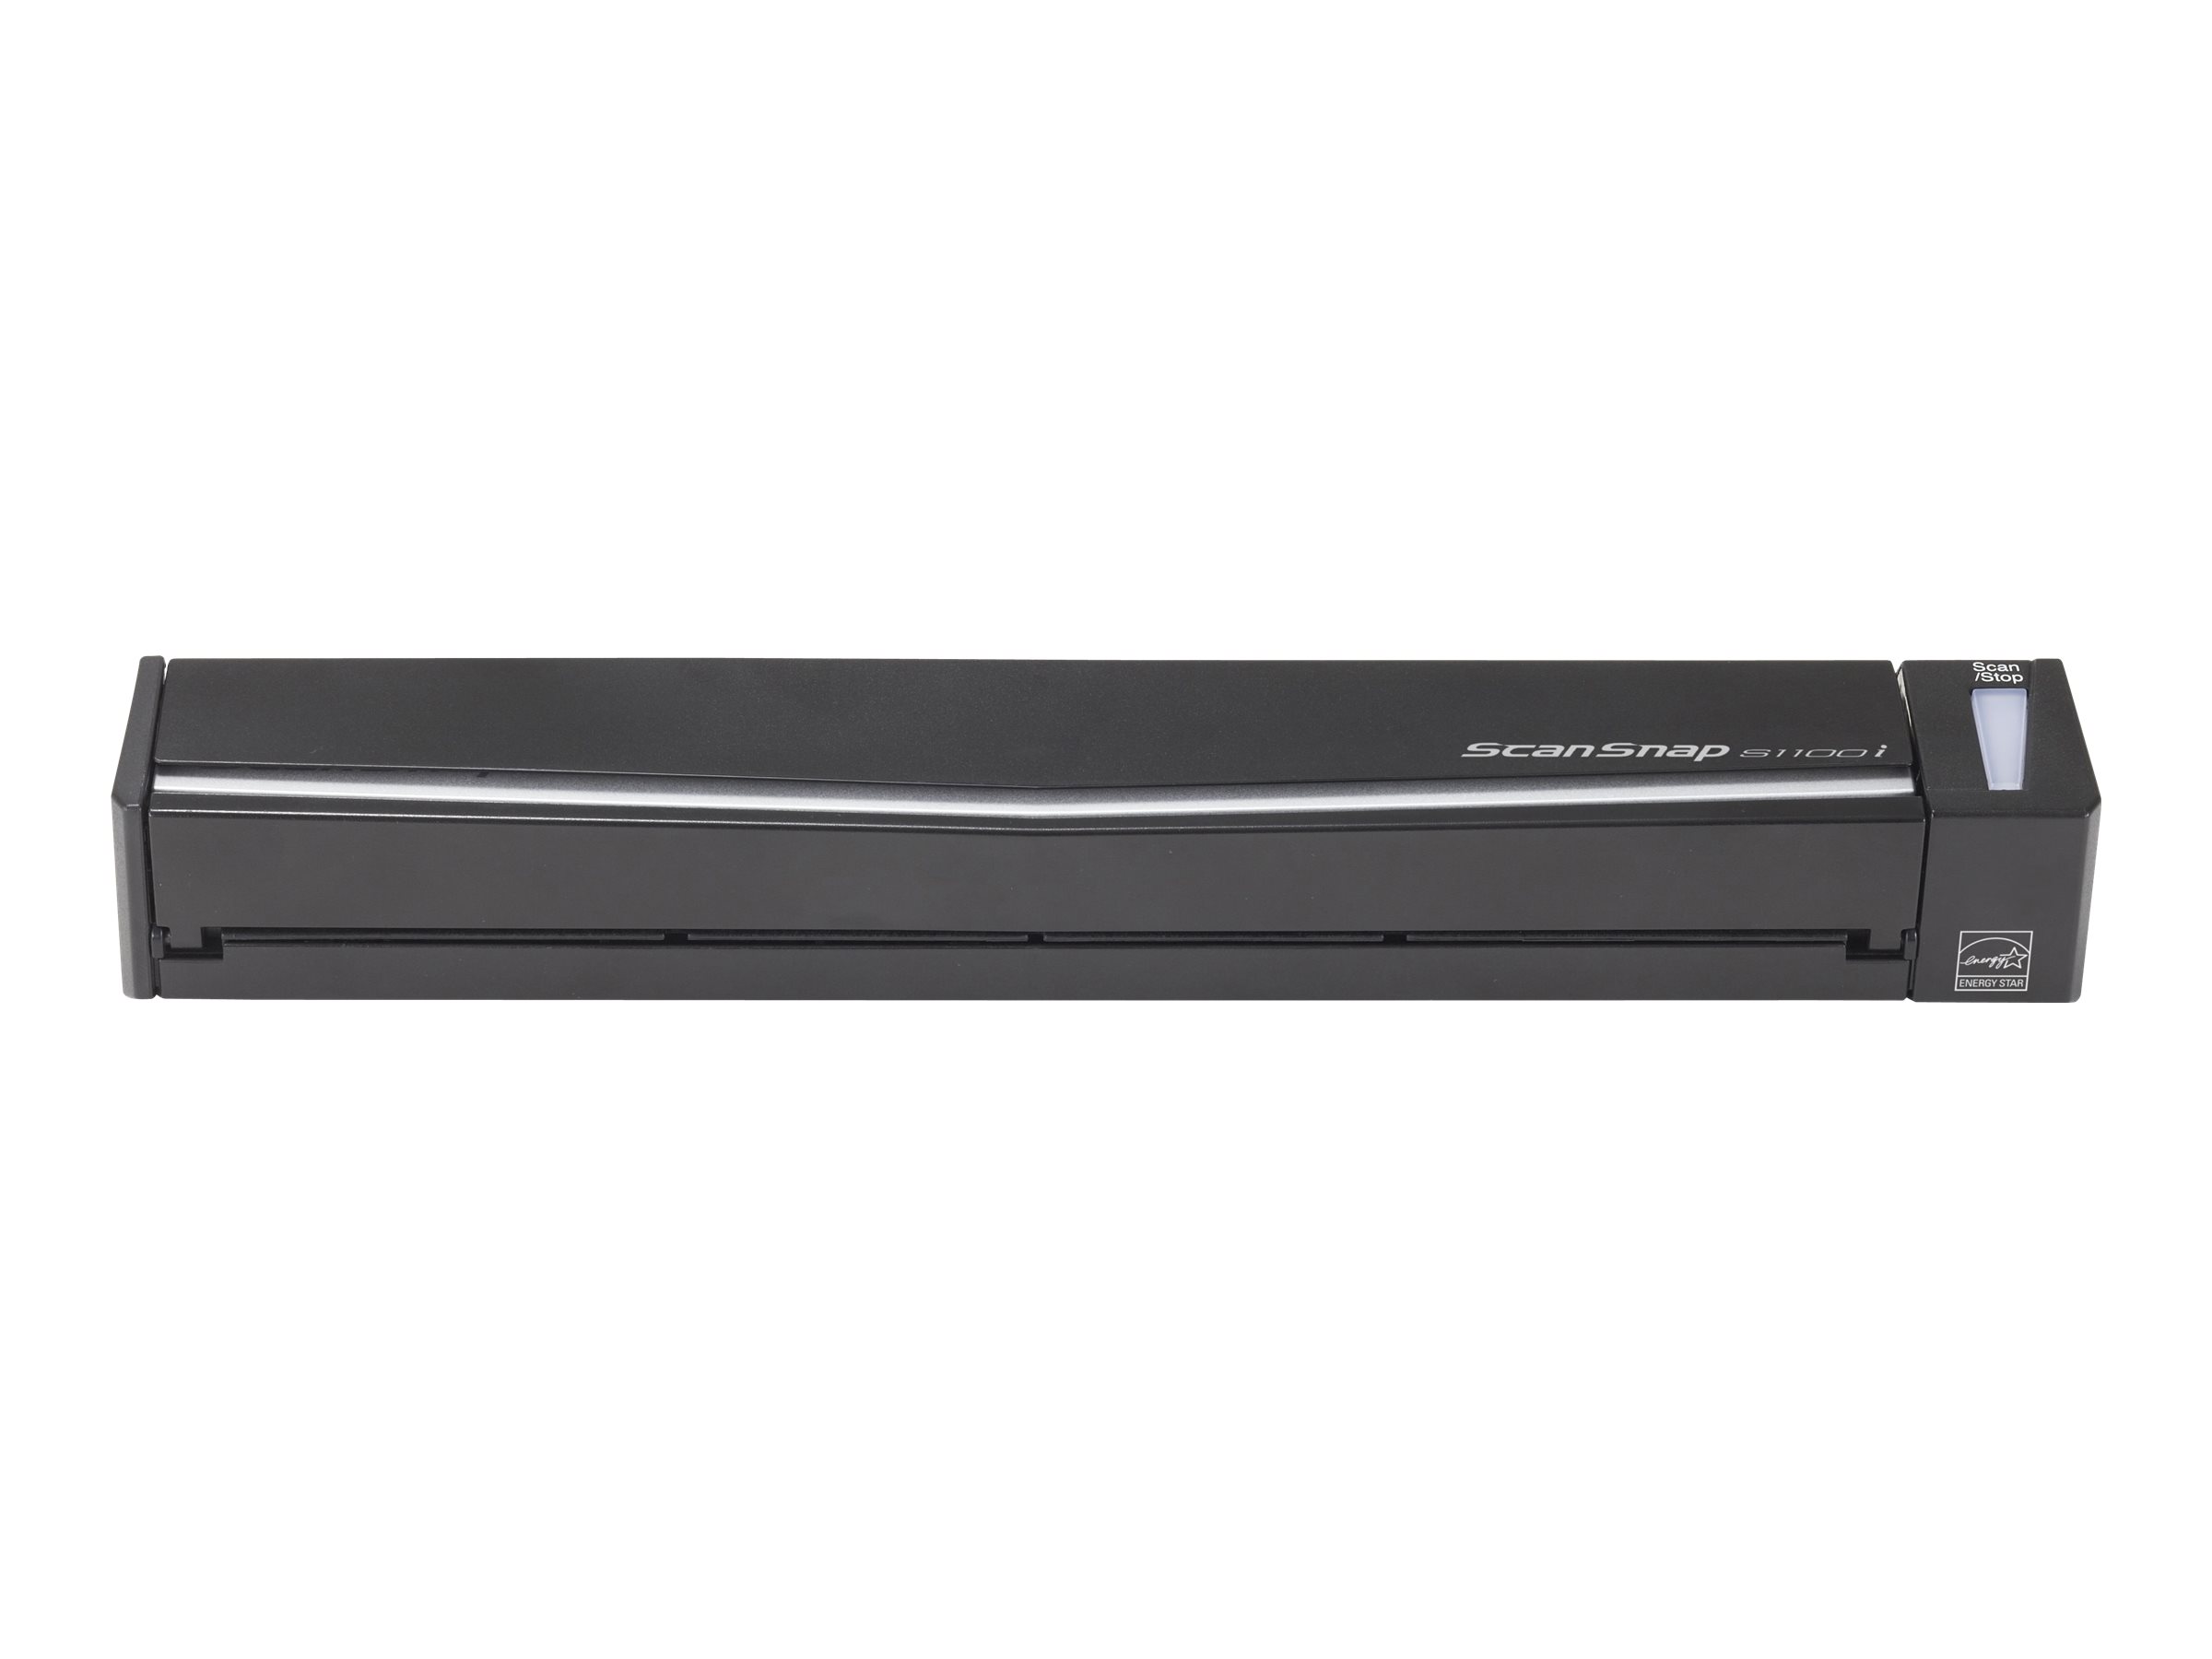 Fujitsu ScanSnap S1100i Scanner A4 color USB2.0 simplex 5.2sec per page USB, Win und Mac ABBYY FineReader